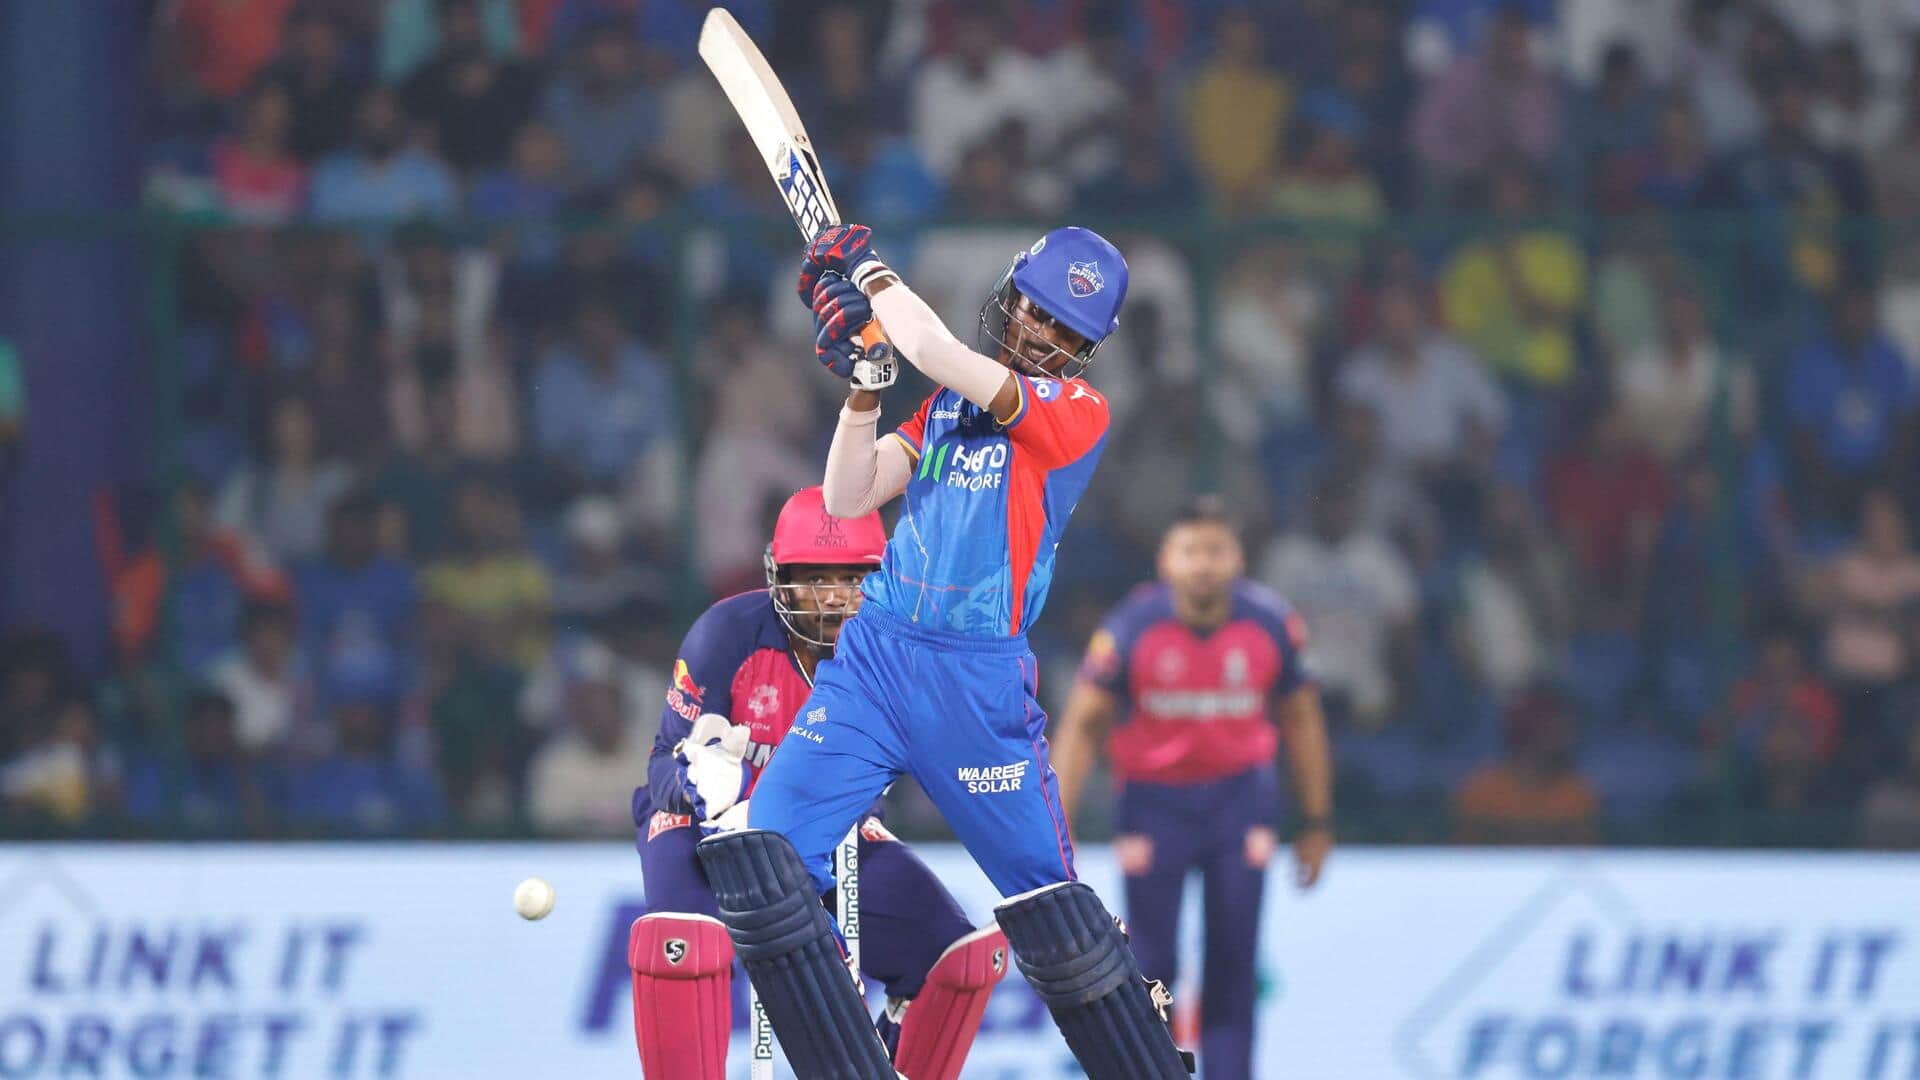 Abishek Porel slams his maiden IPL fifty: Key stats